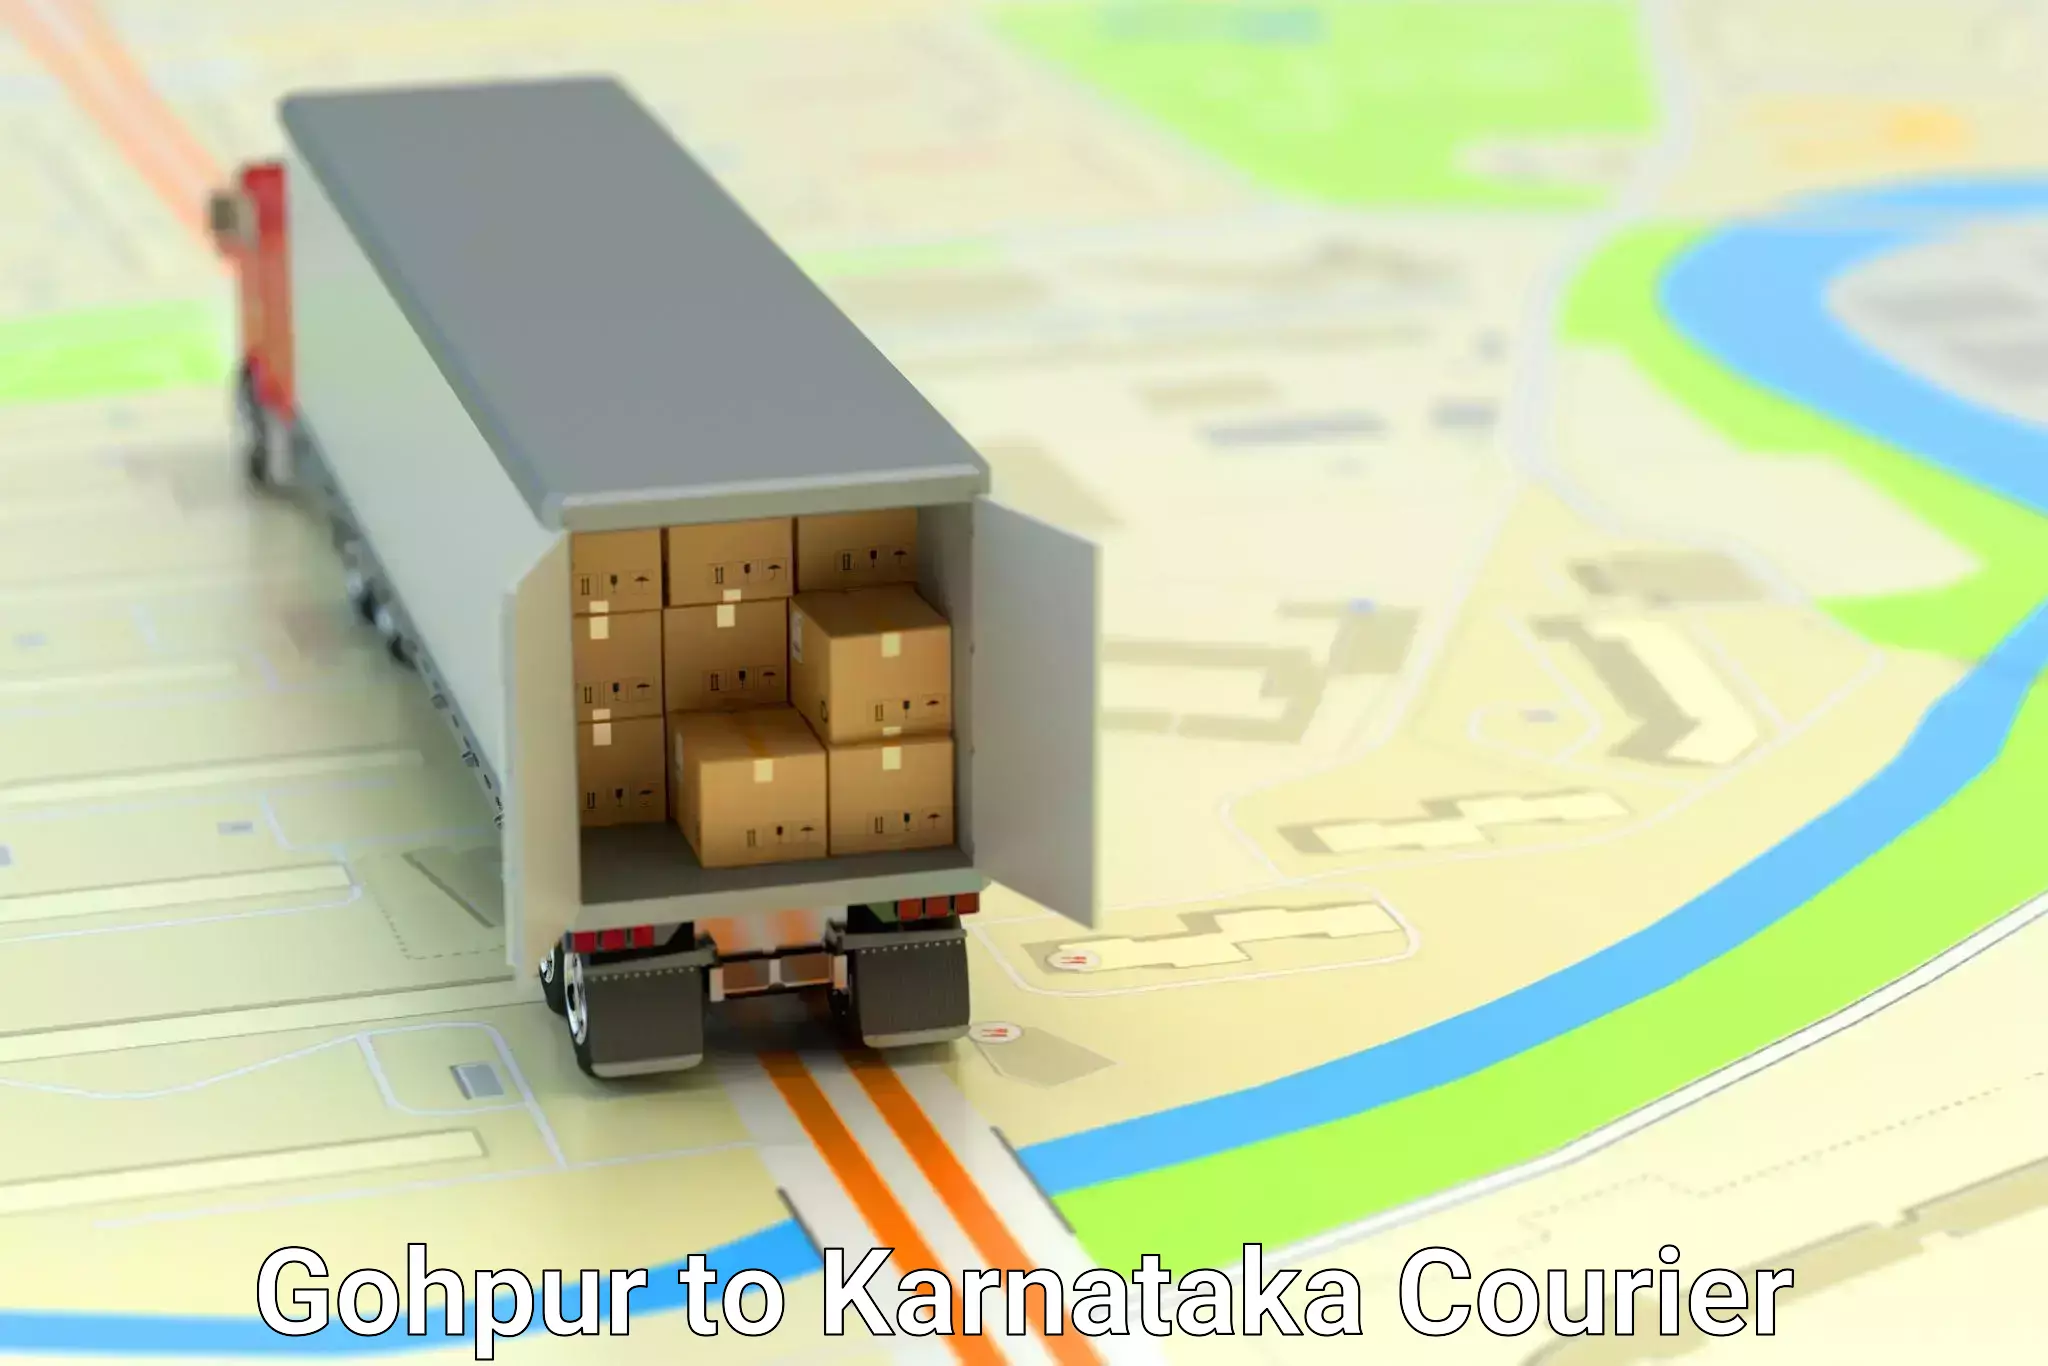 Digital courier platforms Gohpur to Karnataka